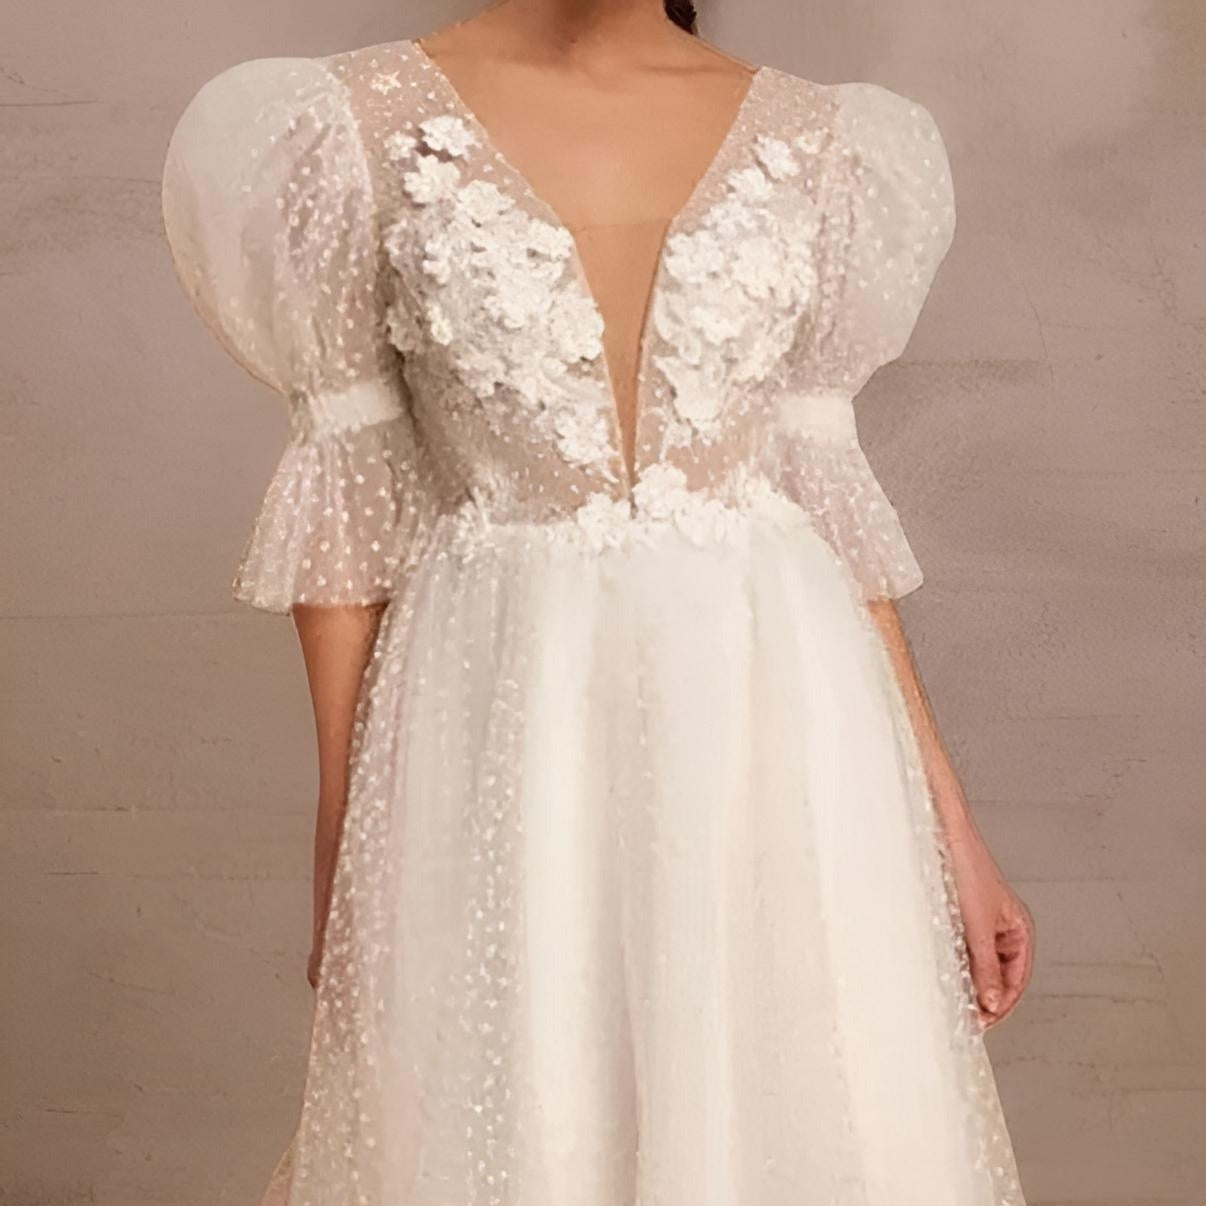 Short Elopement Wedding Dress with Delicate 3D Lace Embellishments